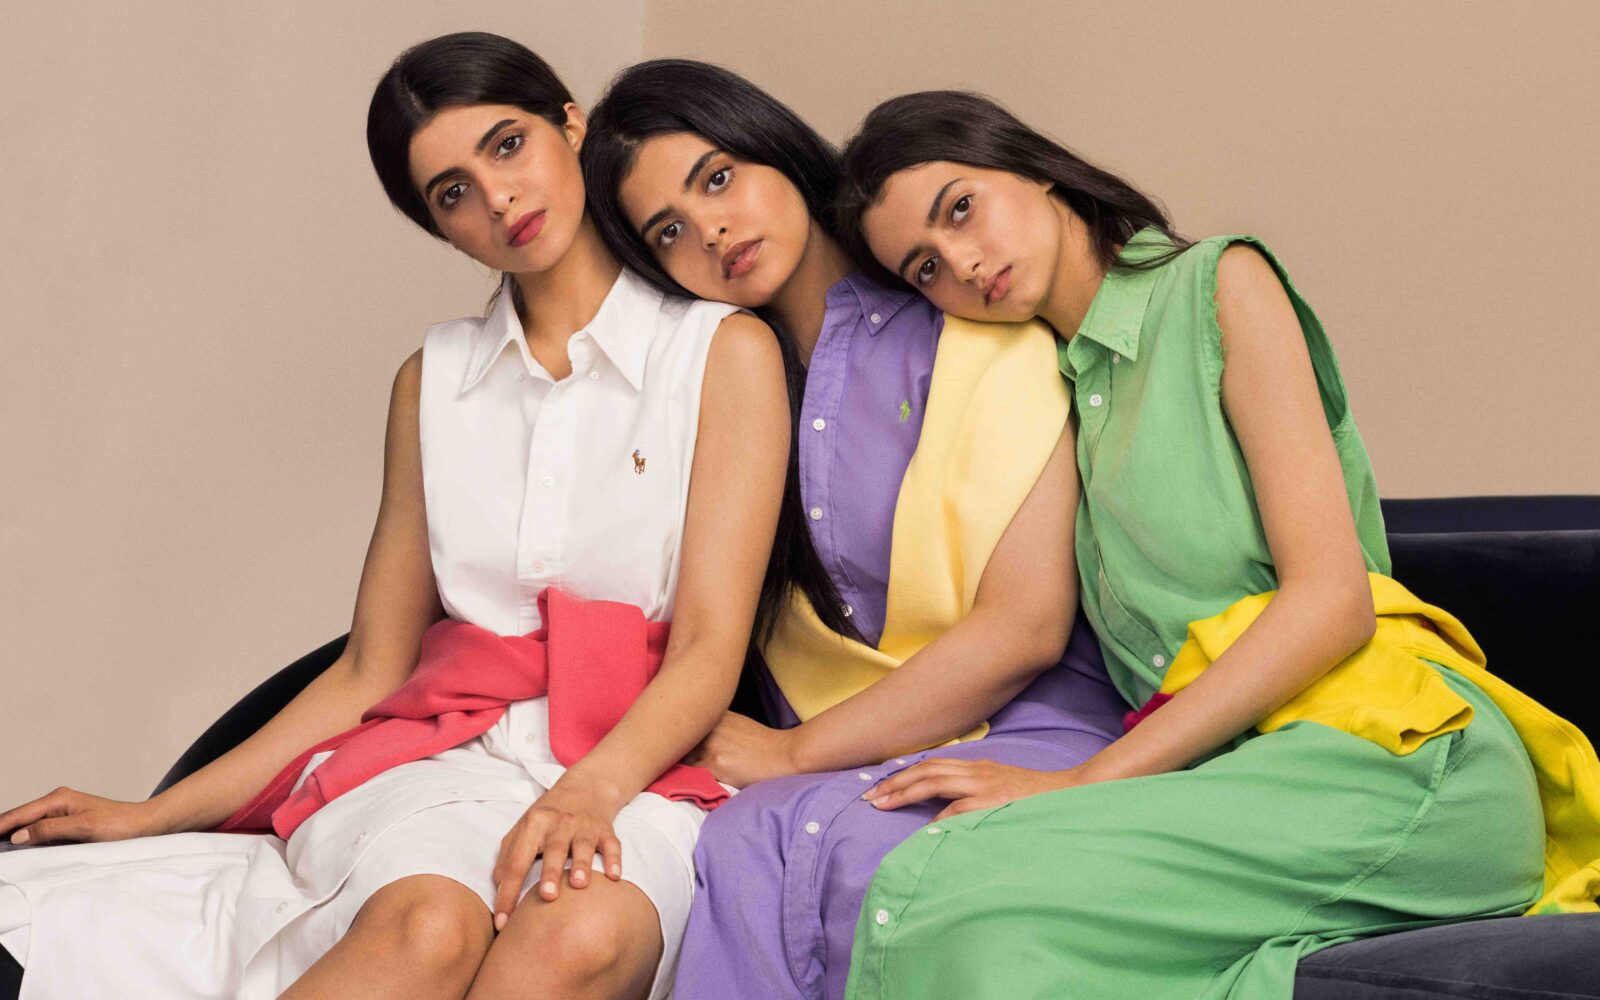 Lebanese style icon Karen Wazen fronts Ralph Lauren campaign with